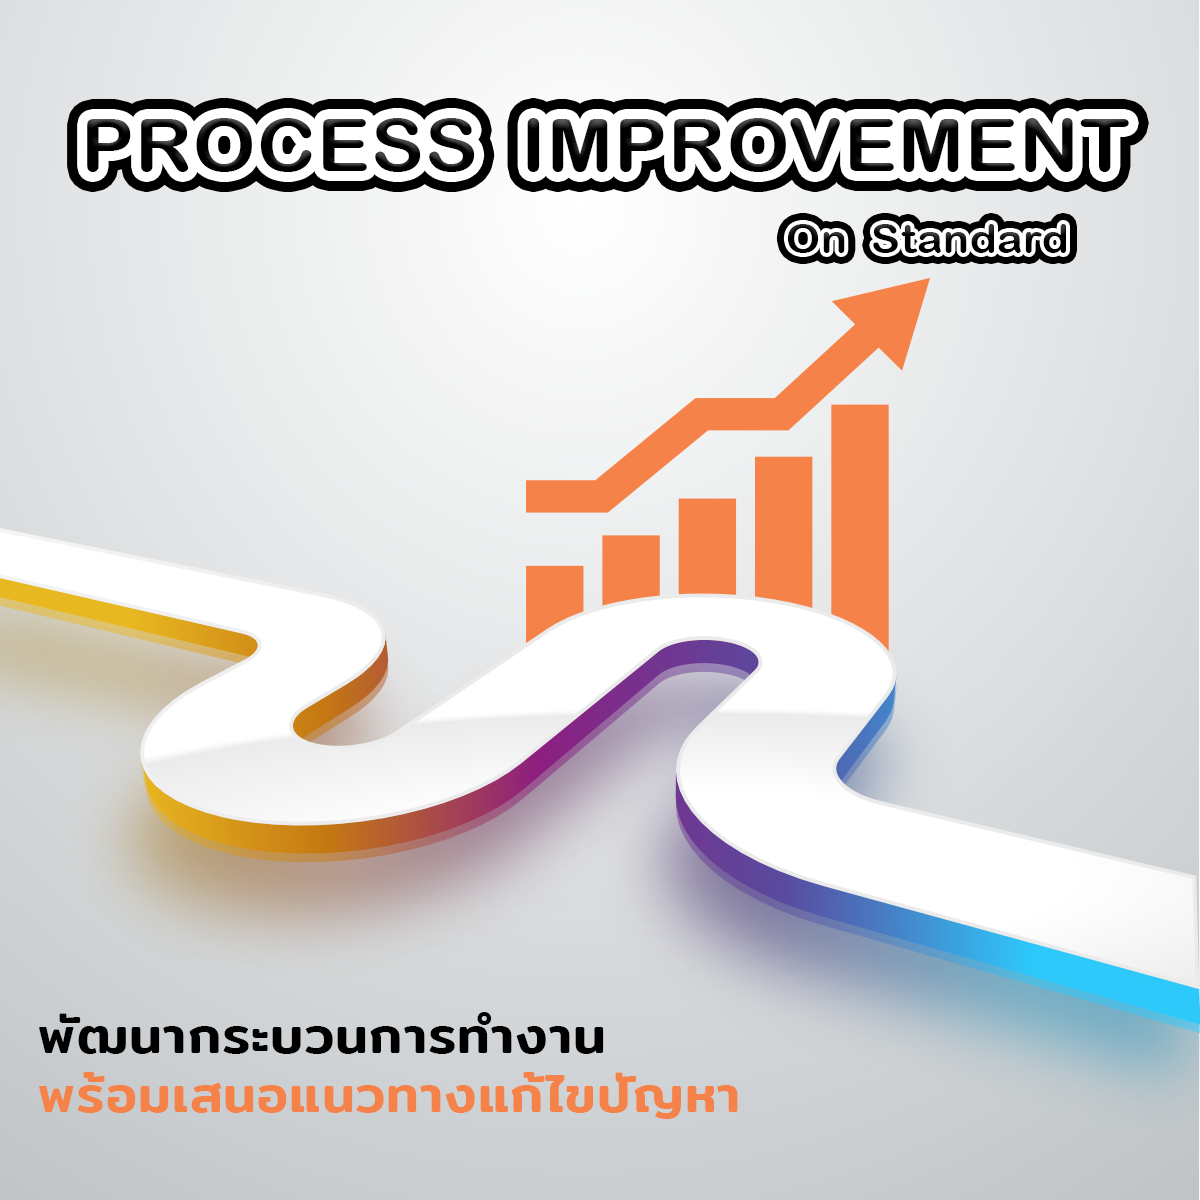 Process Improvement on Standard